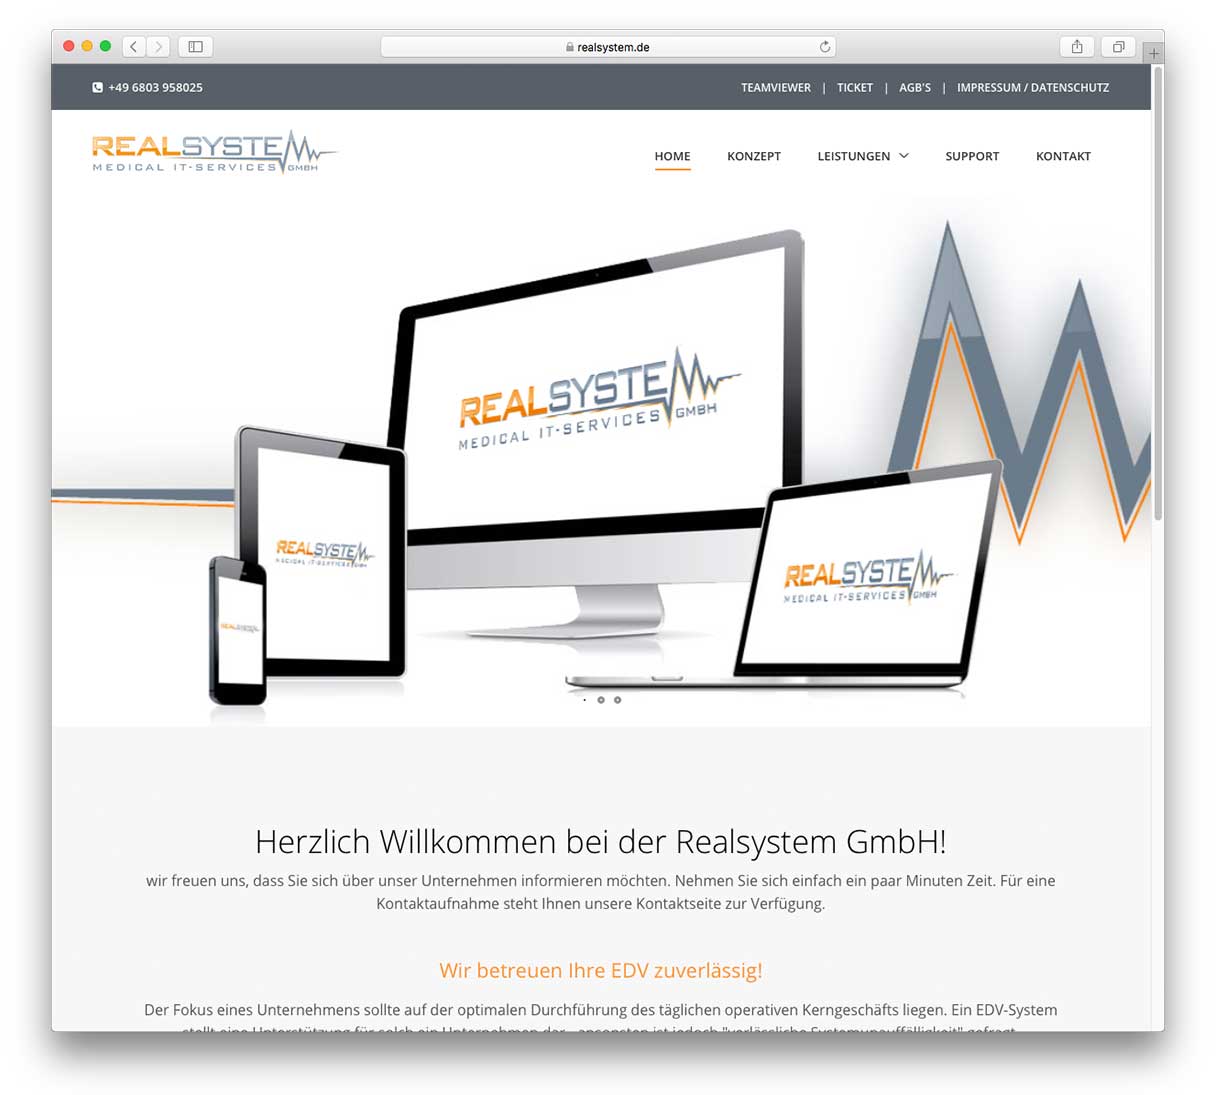 RealSystem GmbH - Medical IT-Services